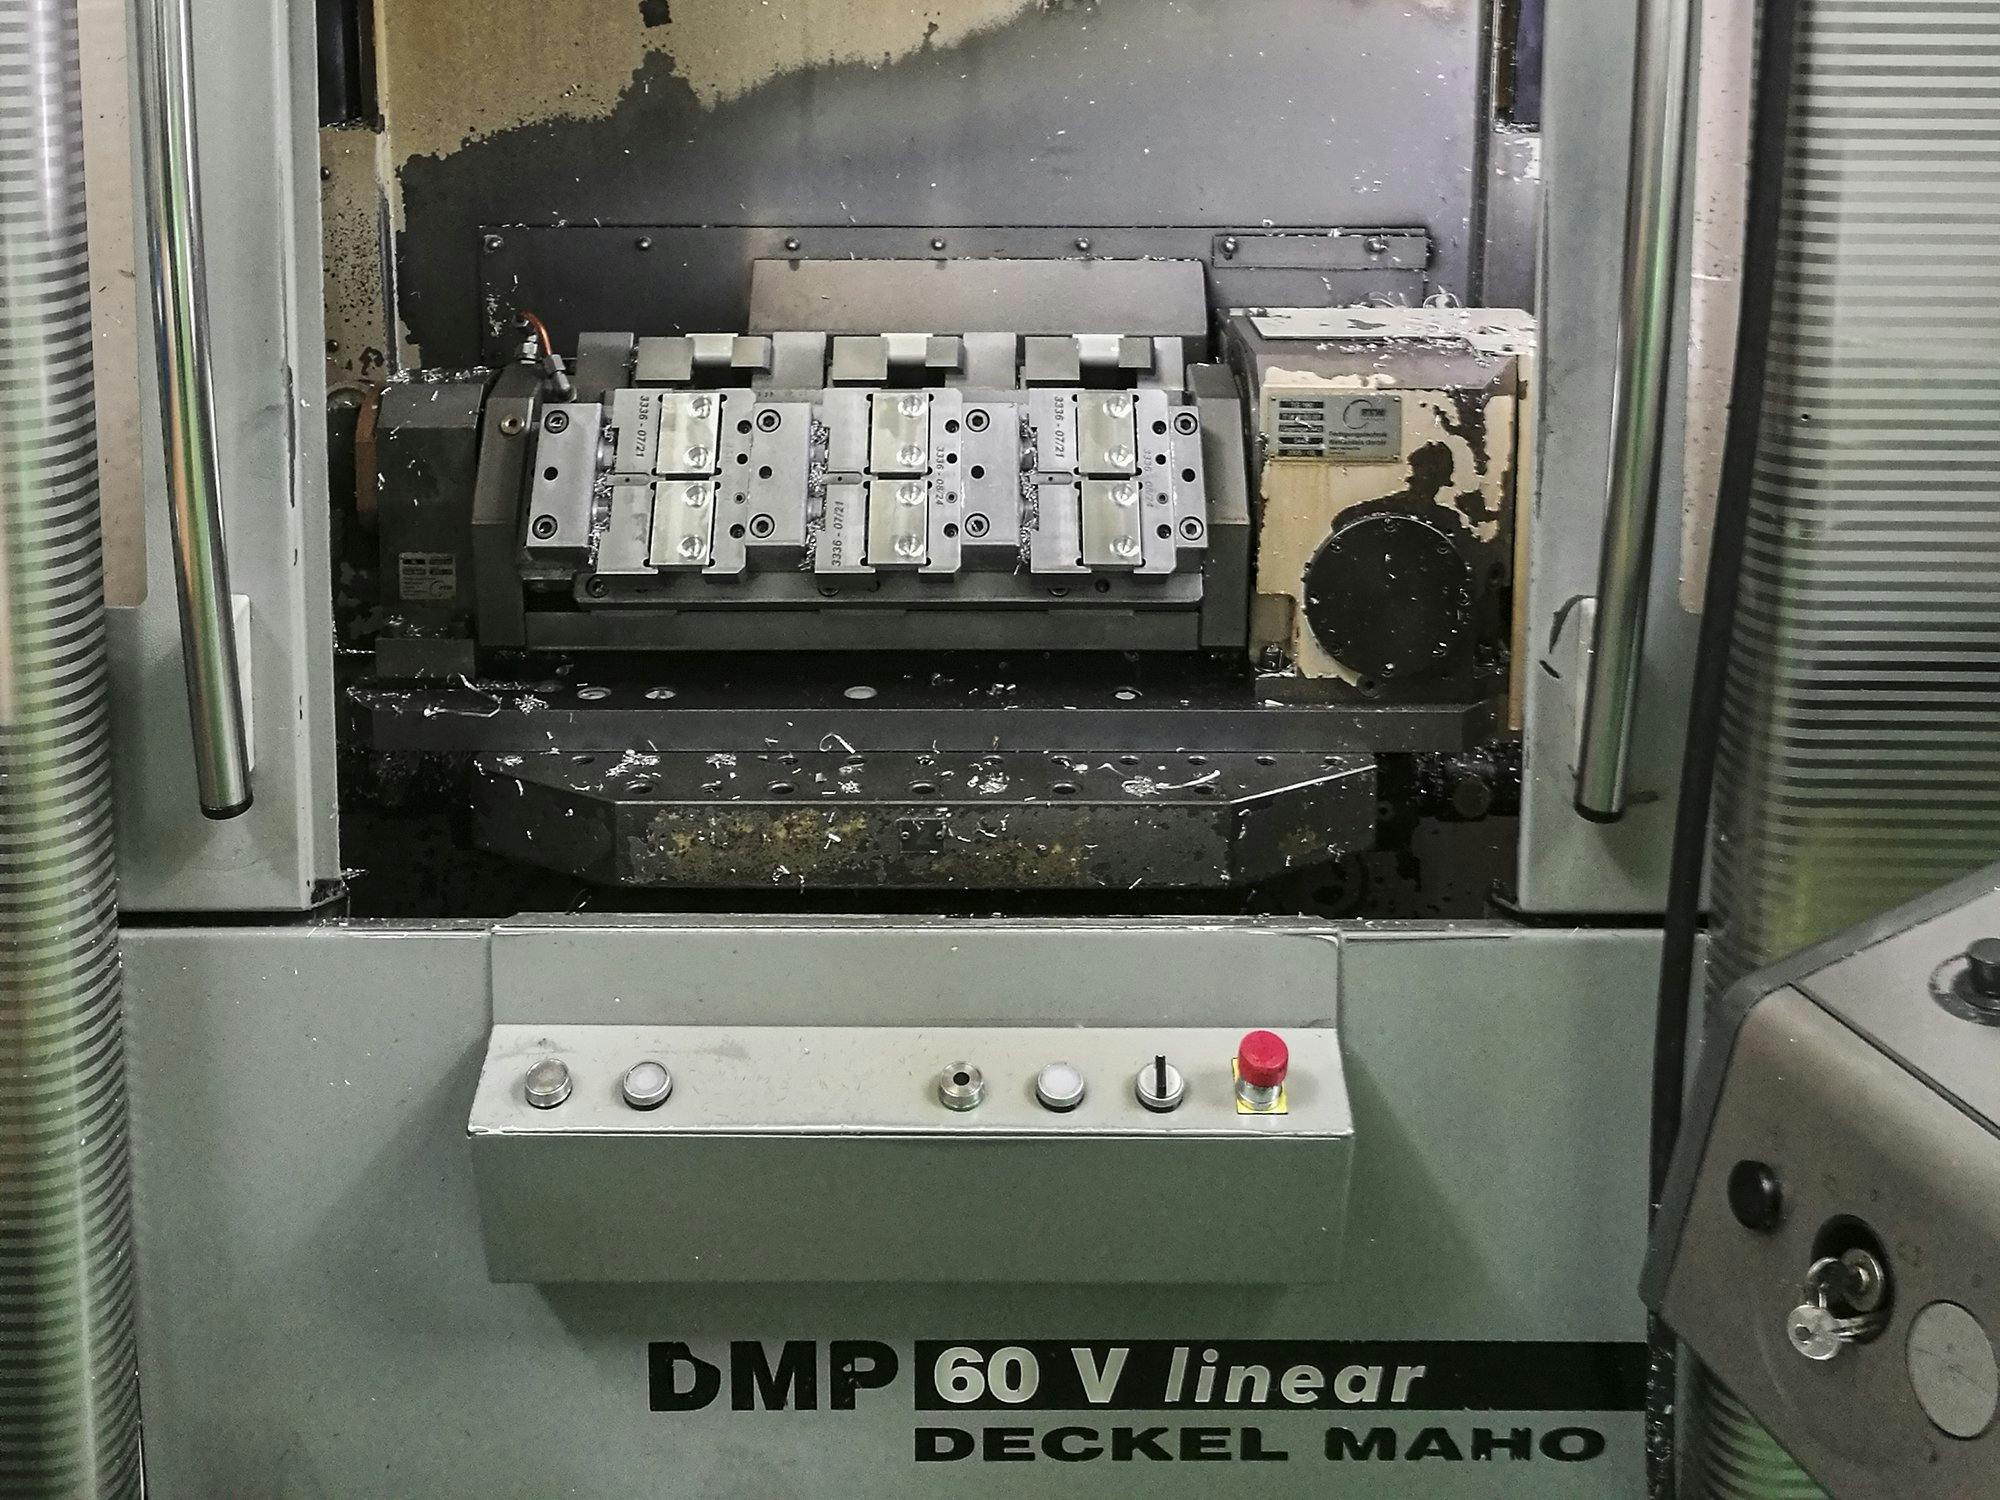 DECKEL MAHO DMP 60 V linear Mašinos vaizdas iš priekio